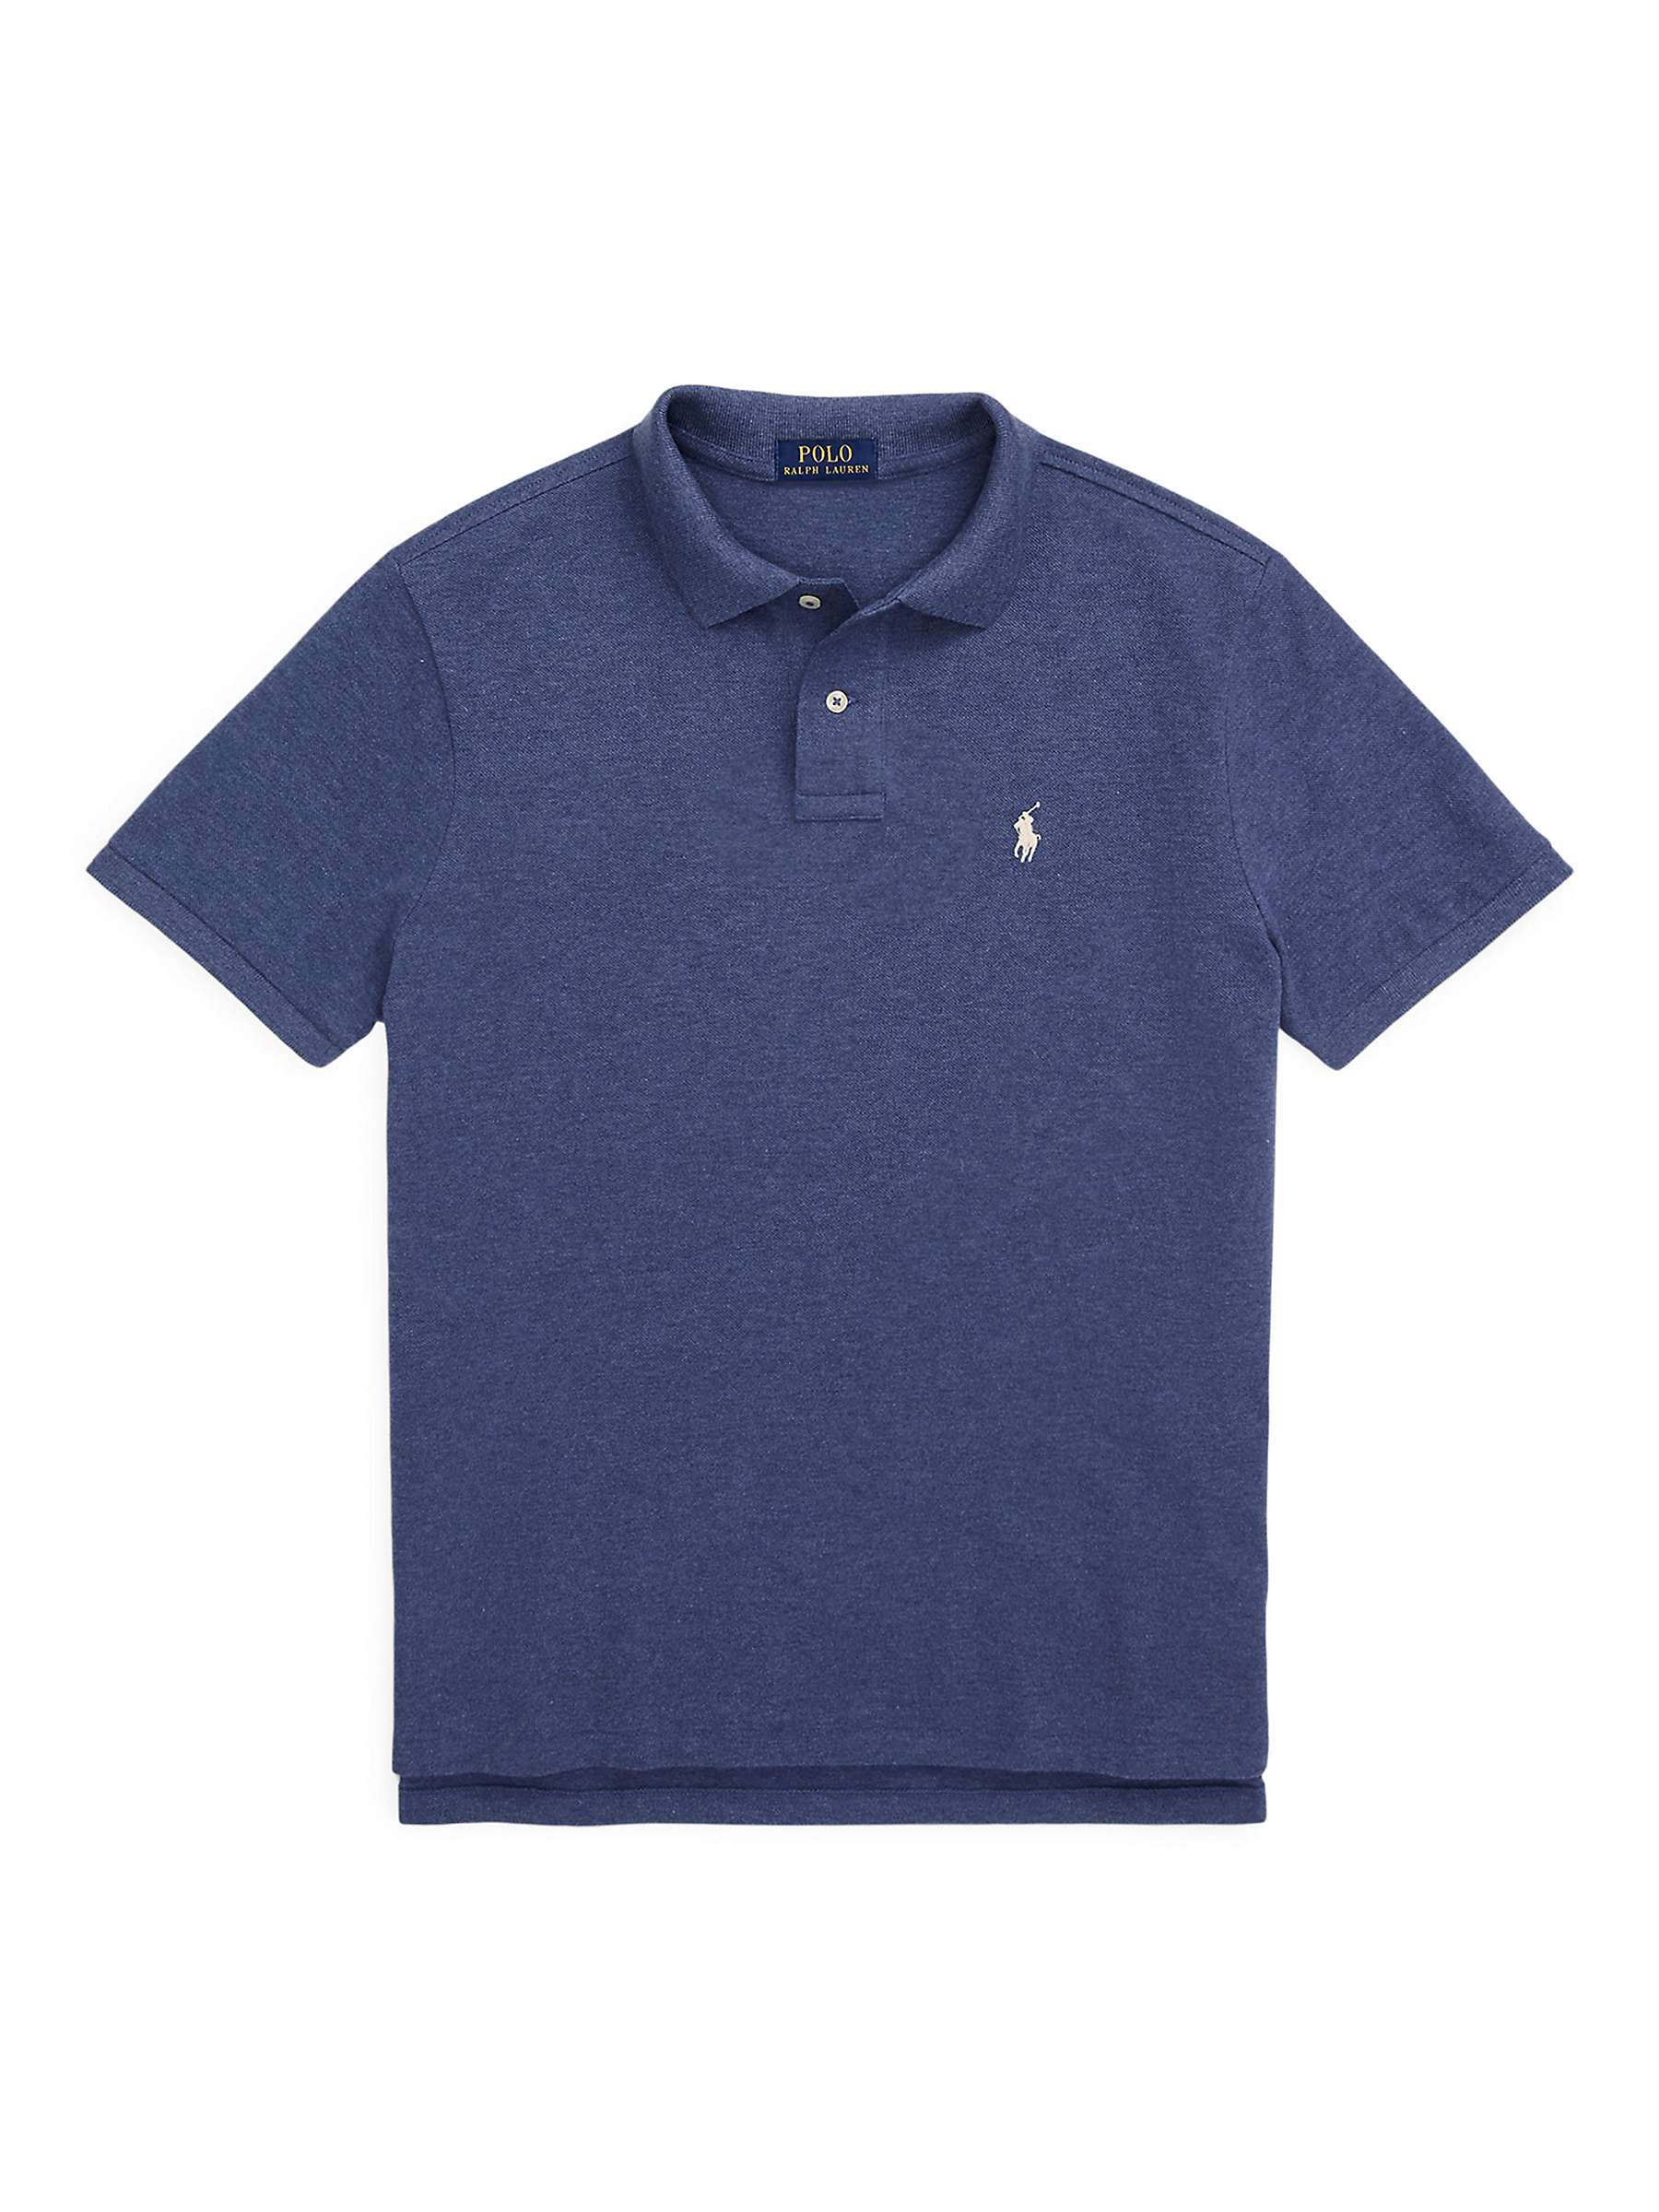 Polo Ralph Lauren Slim Fit Mesh Polo Shirt, Blue at John Lewis & Partners